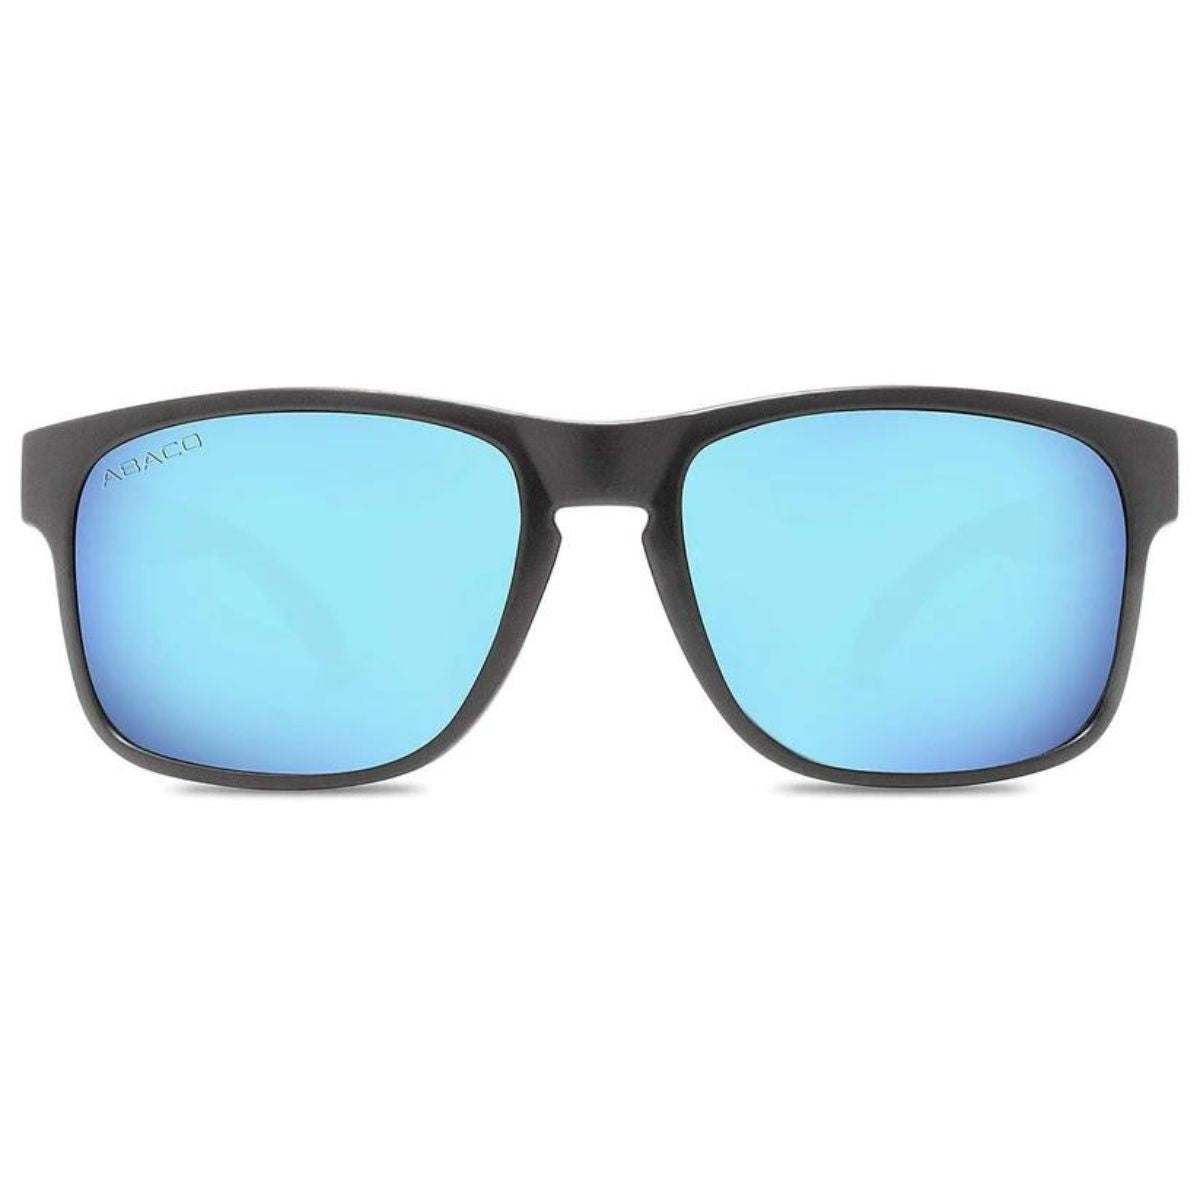 Abaco Dockside Sunglasses in Gloss Black/Caribbean Blue